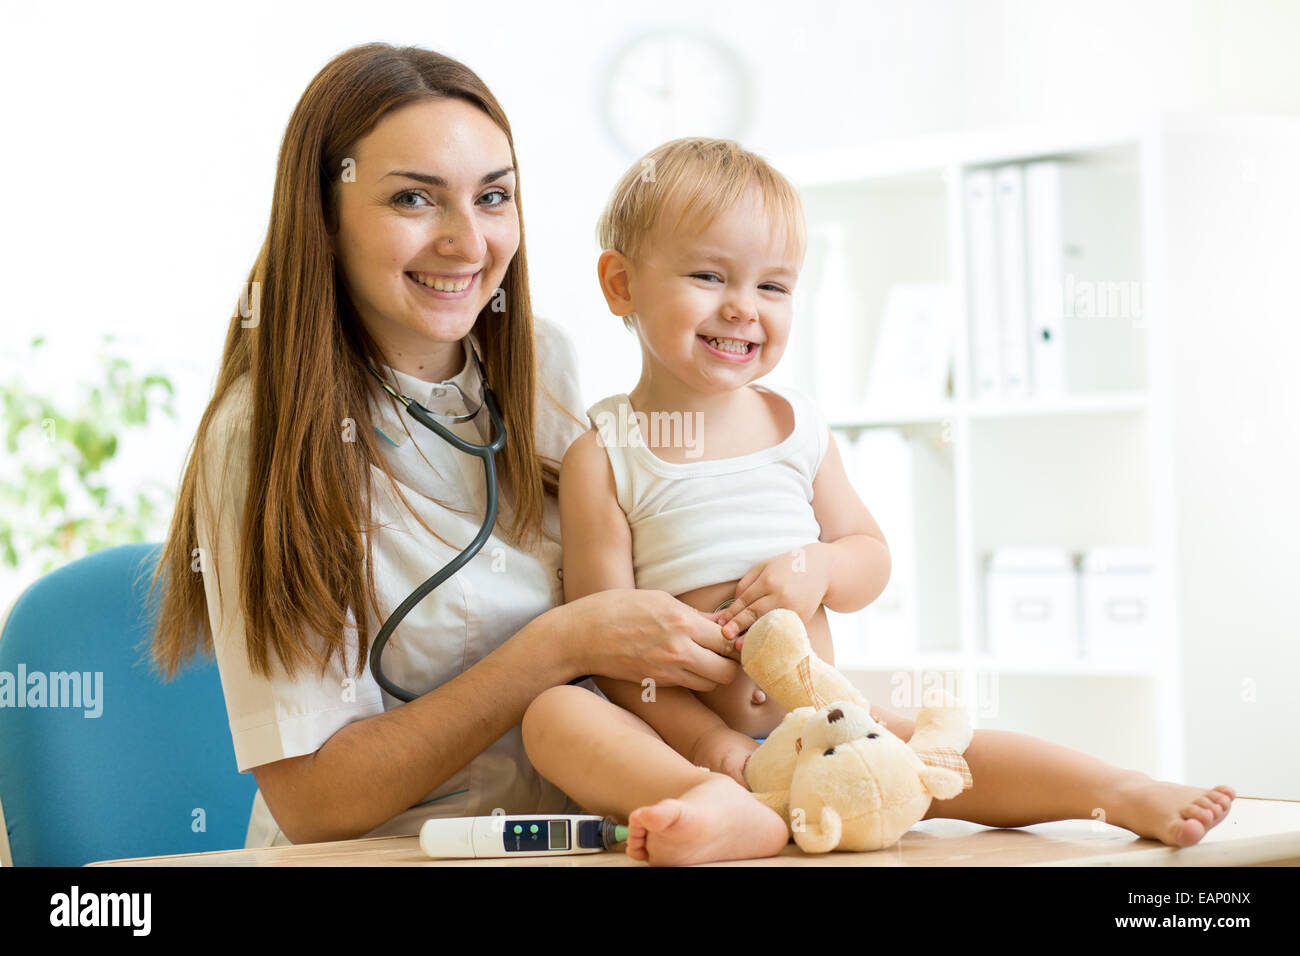 medic pediatrician examining of child with stethoscope Stock Photo